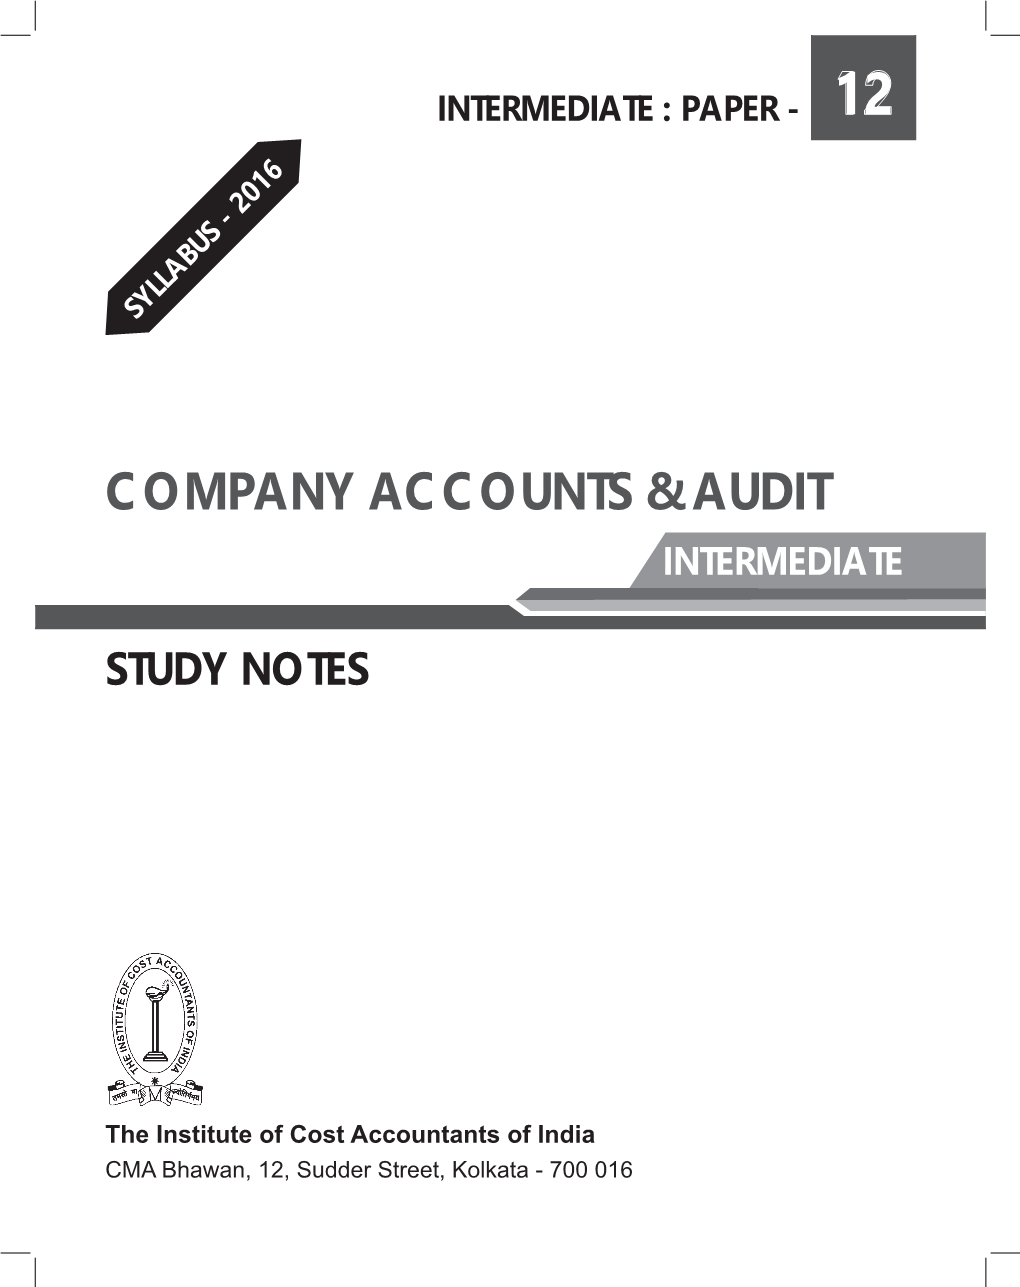 Paper-12 Company Accounts & Audit